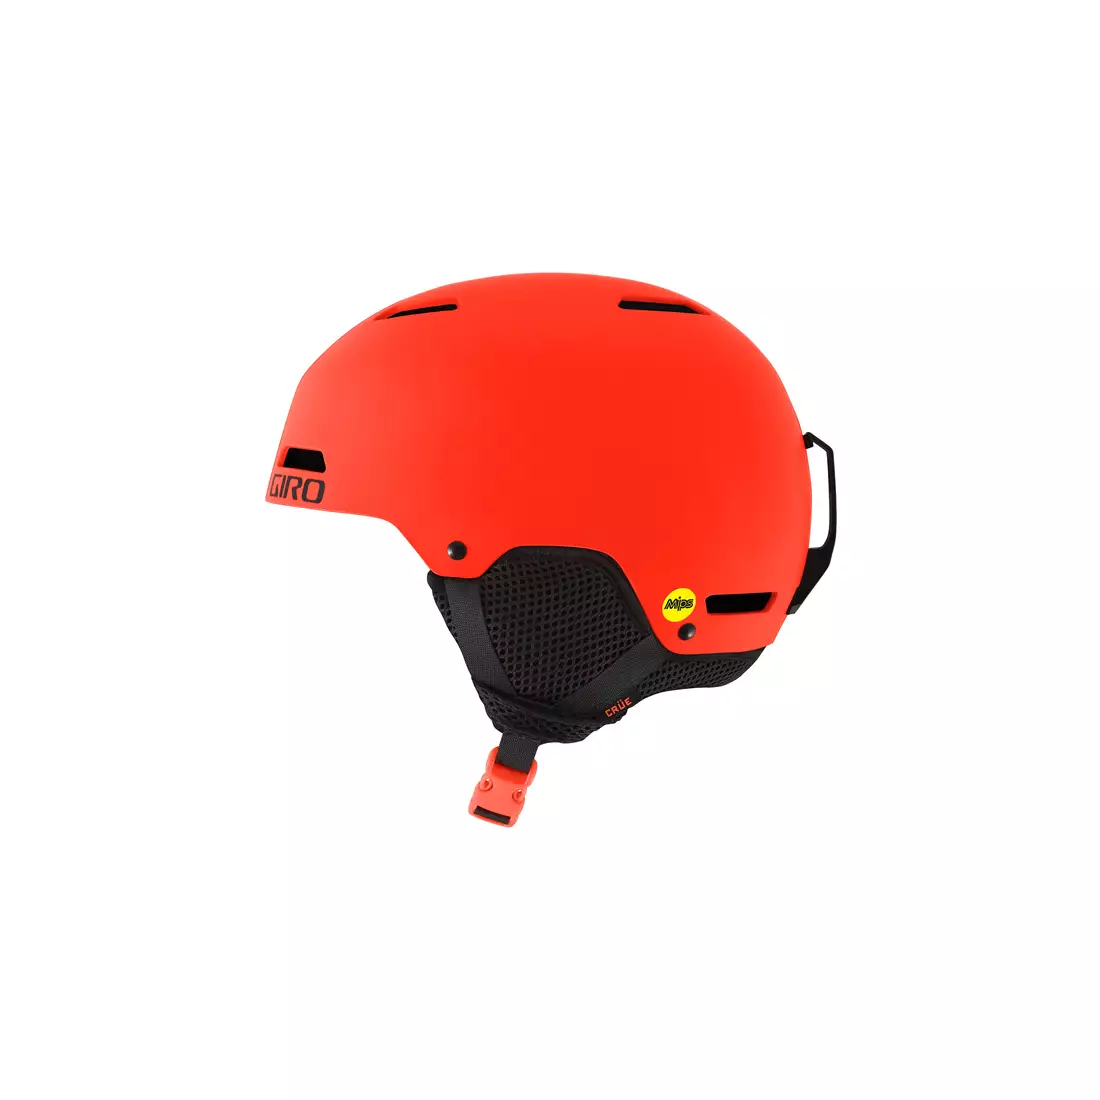 GIRO winter children's / junior helmet CRUE MIPS matte vermillion GR-7095233